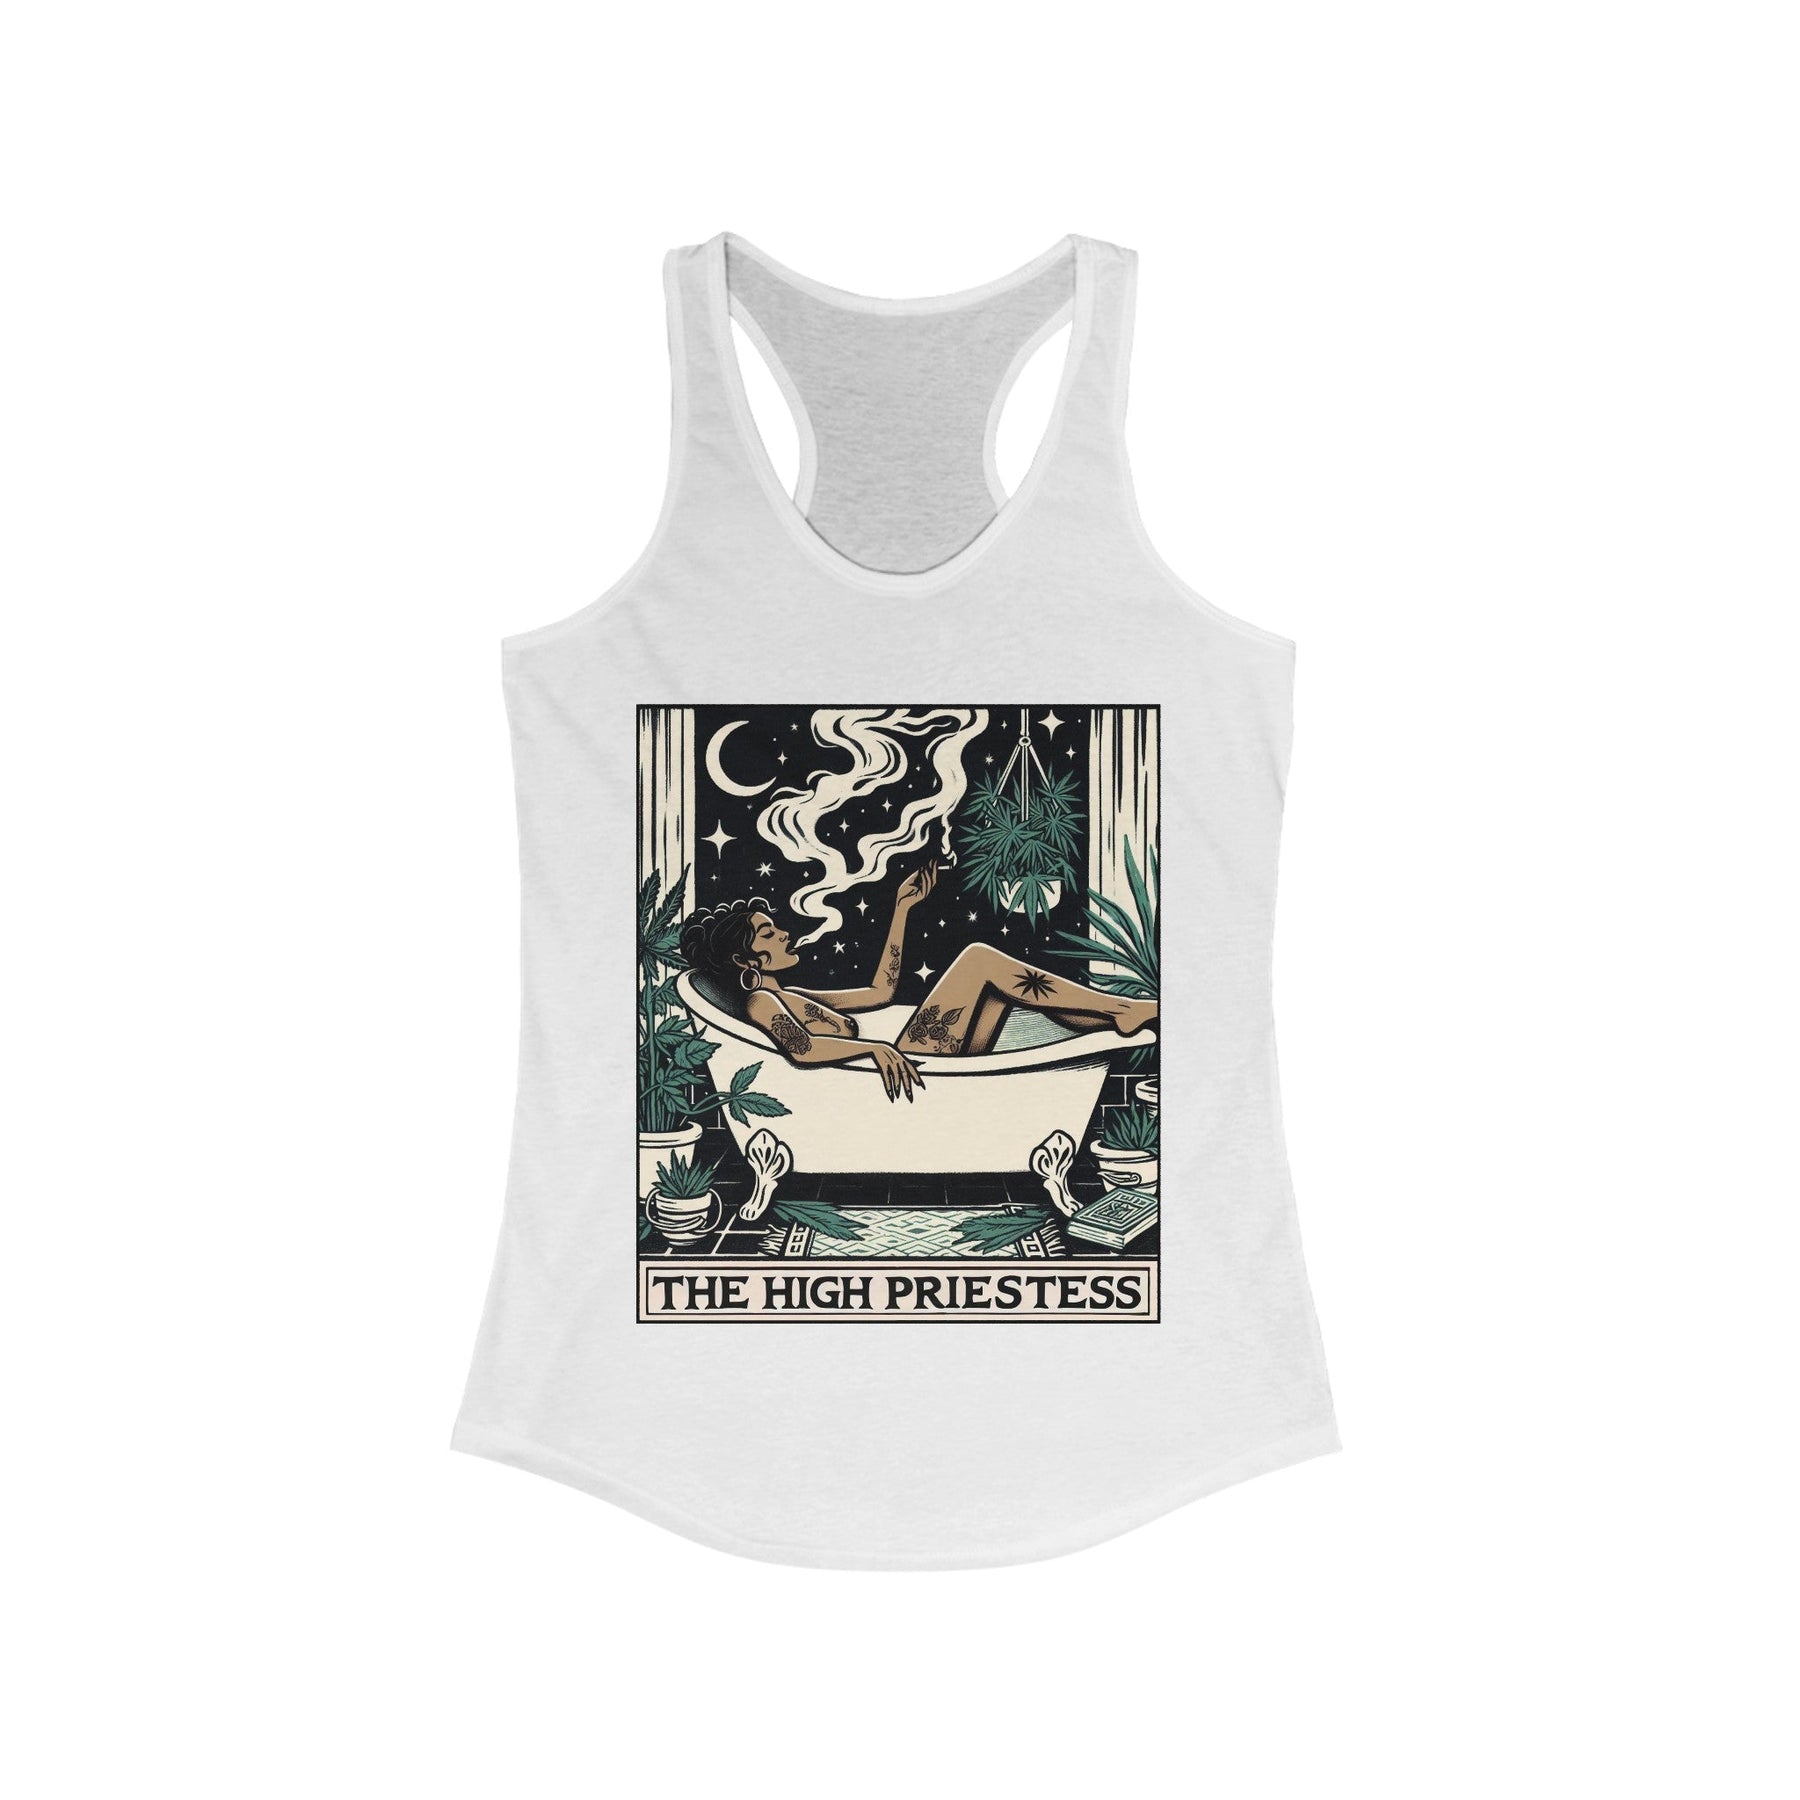 The High Priestess Goddess Women's Racerback Tank - Goth Cloth Co.Tank Top72141286005512814341